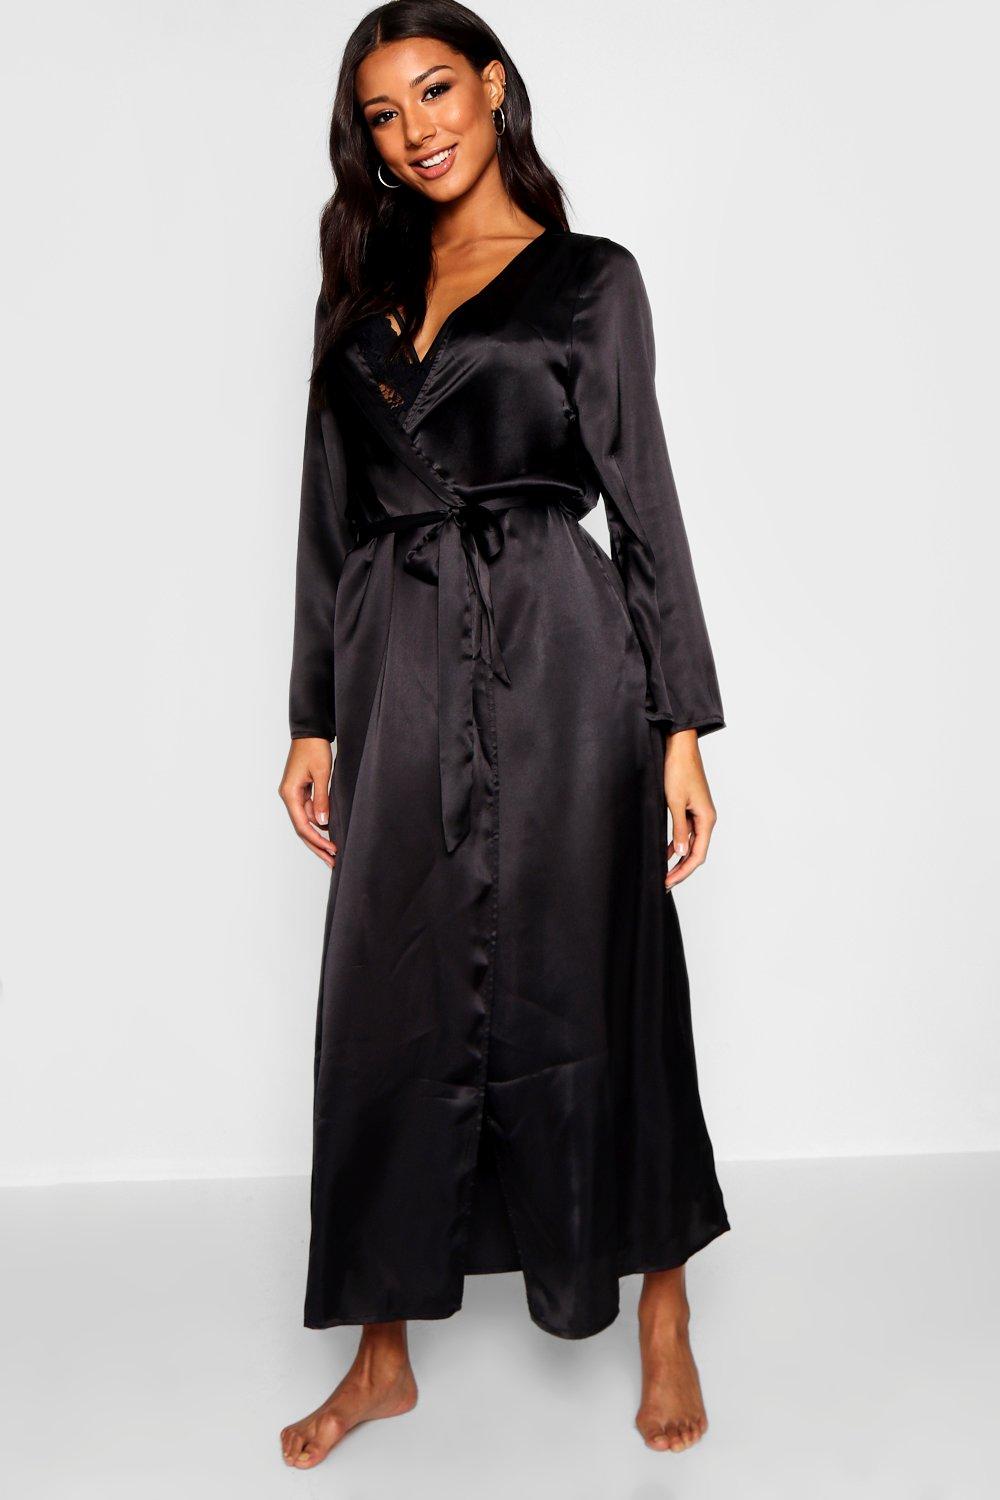 black satin kimono dress